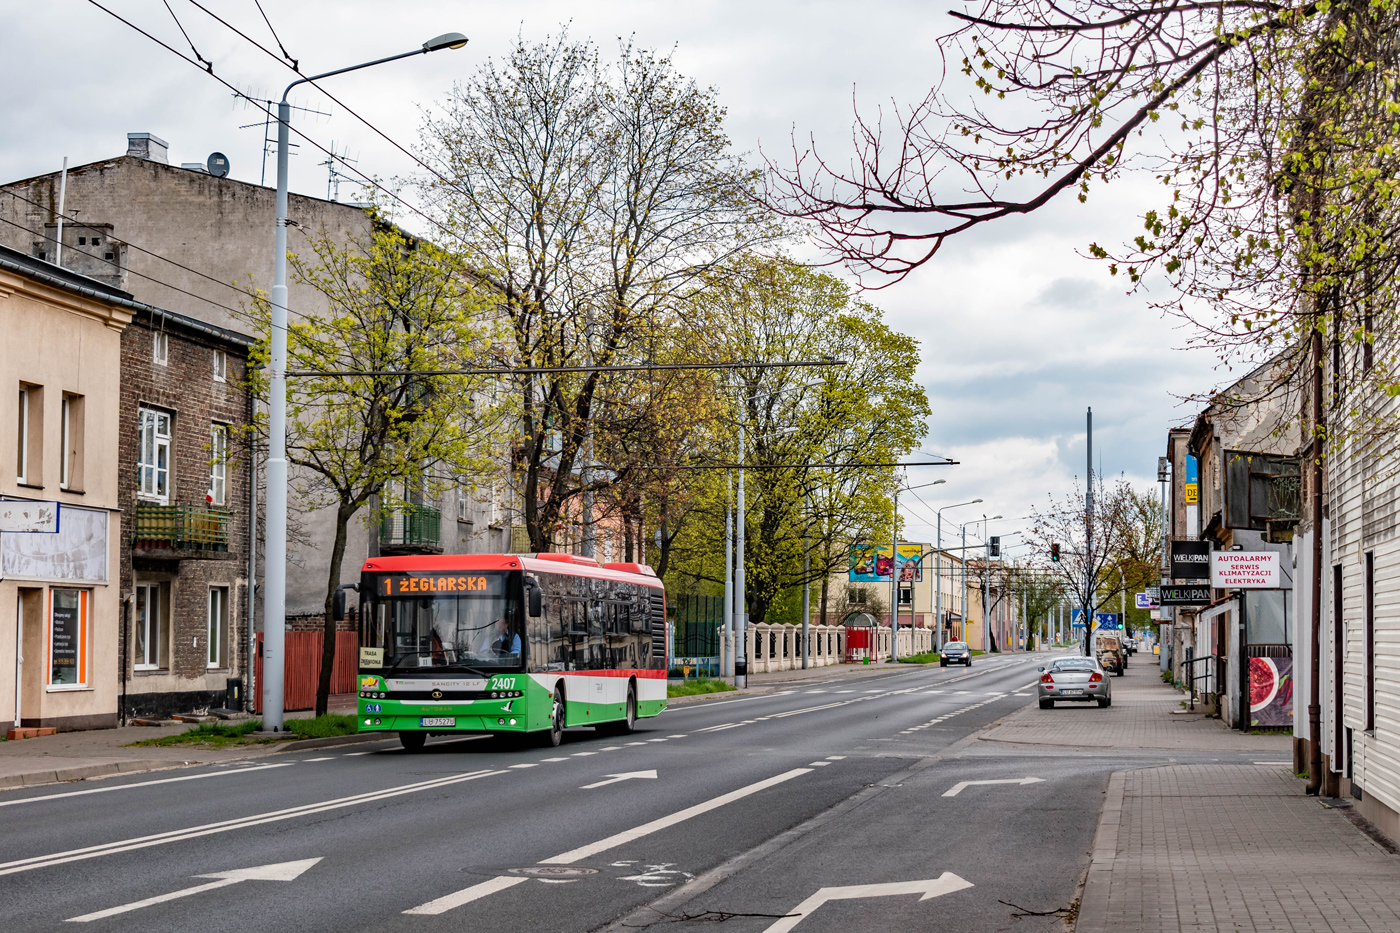 Lublin, Autosan Sancity M12LF # 2407